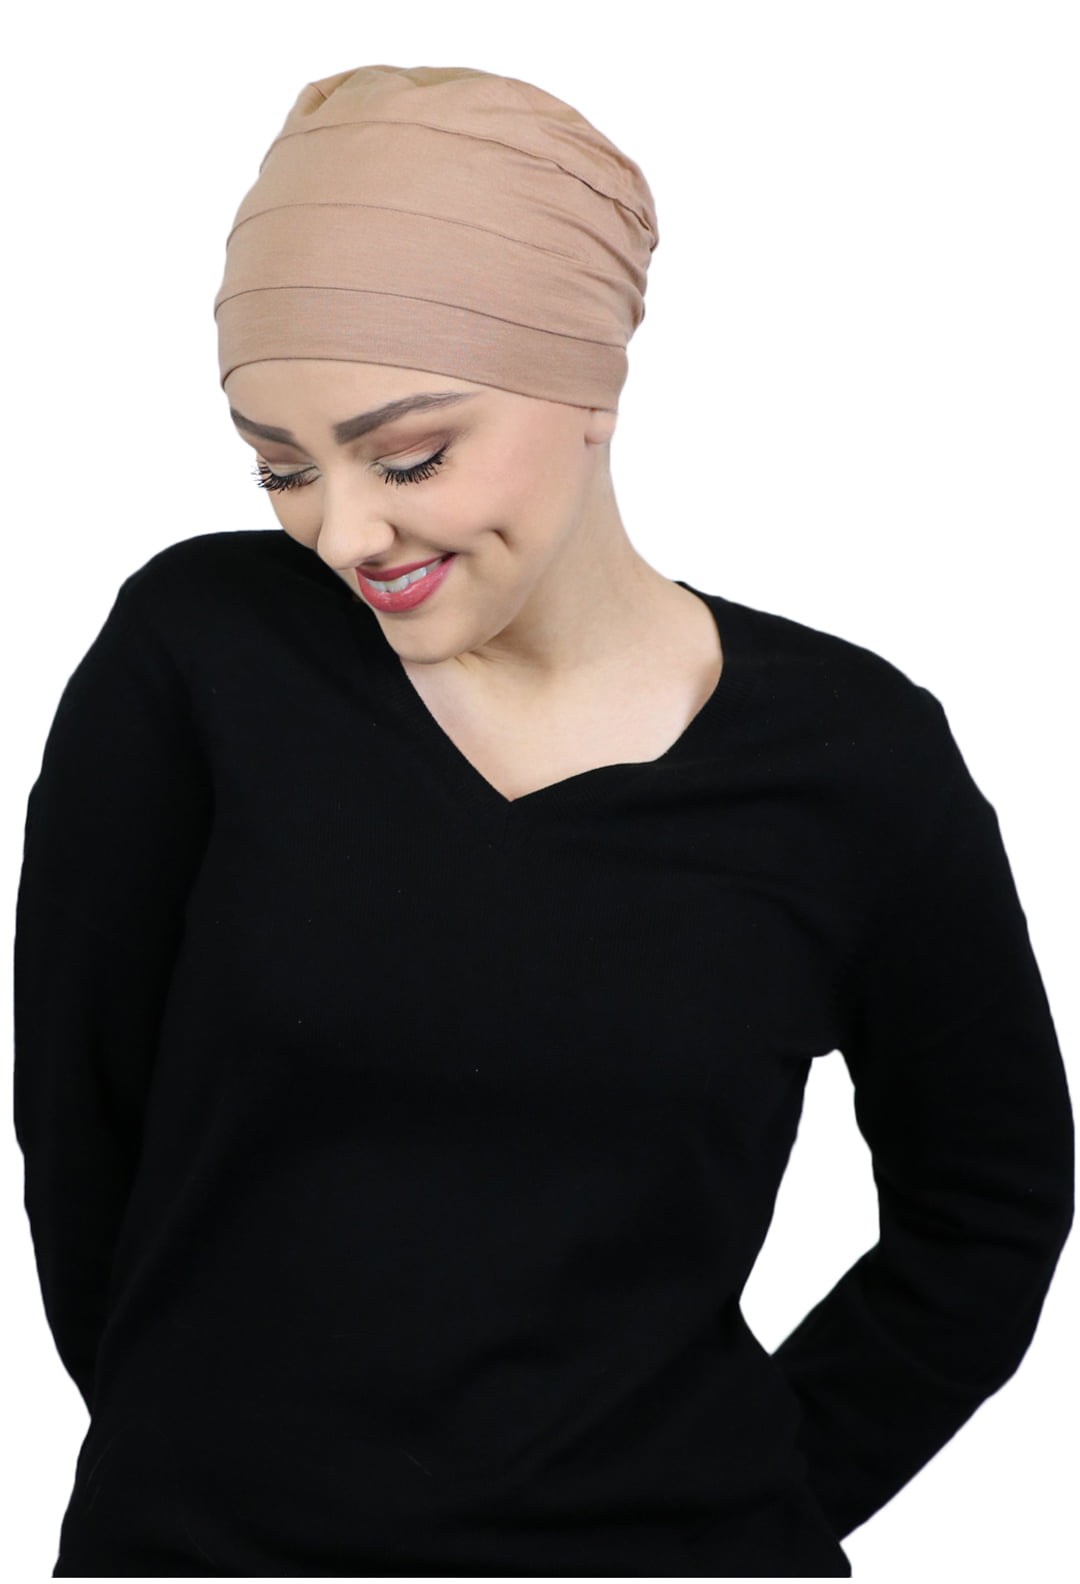 TOTZY Chemo Cap Turban Headwear Womens Beanie Headwrap Lace Hat for Hairloss Beige